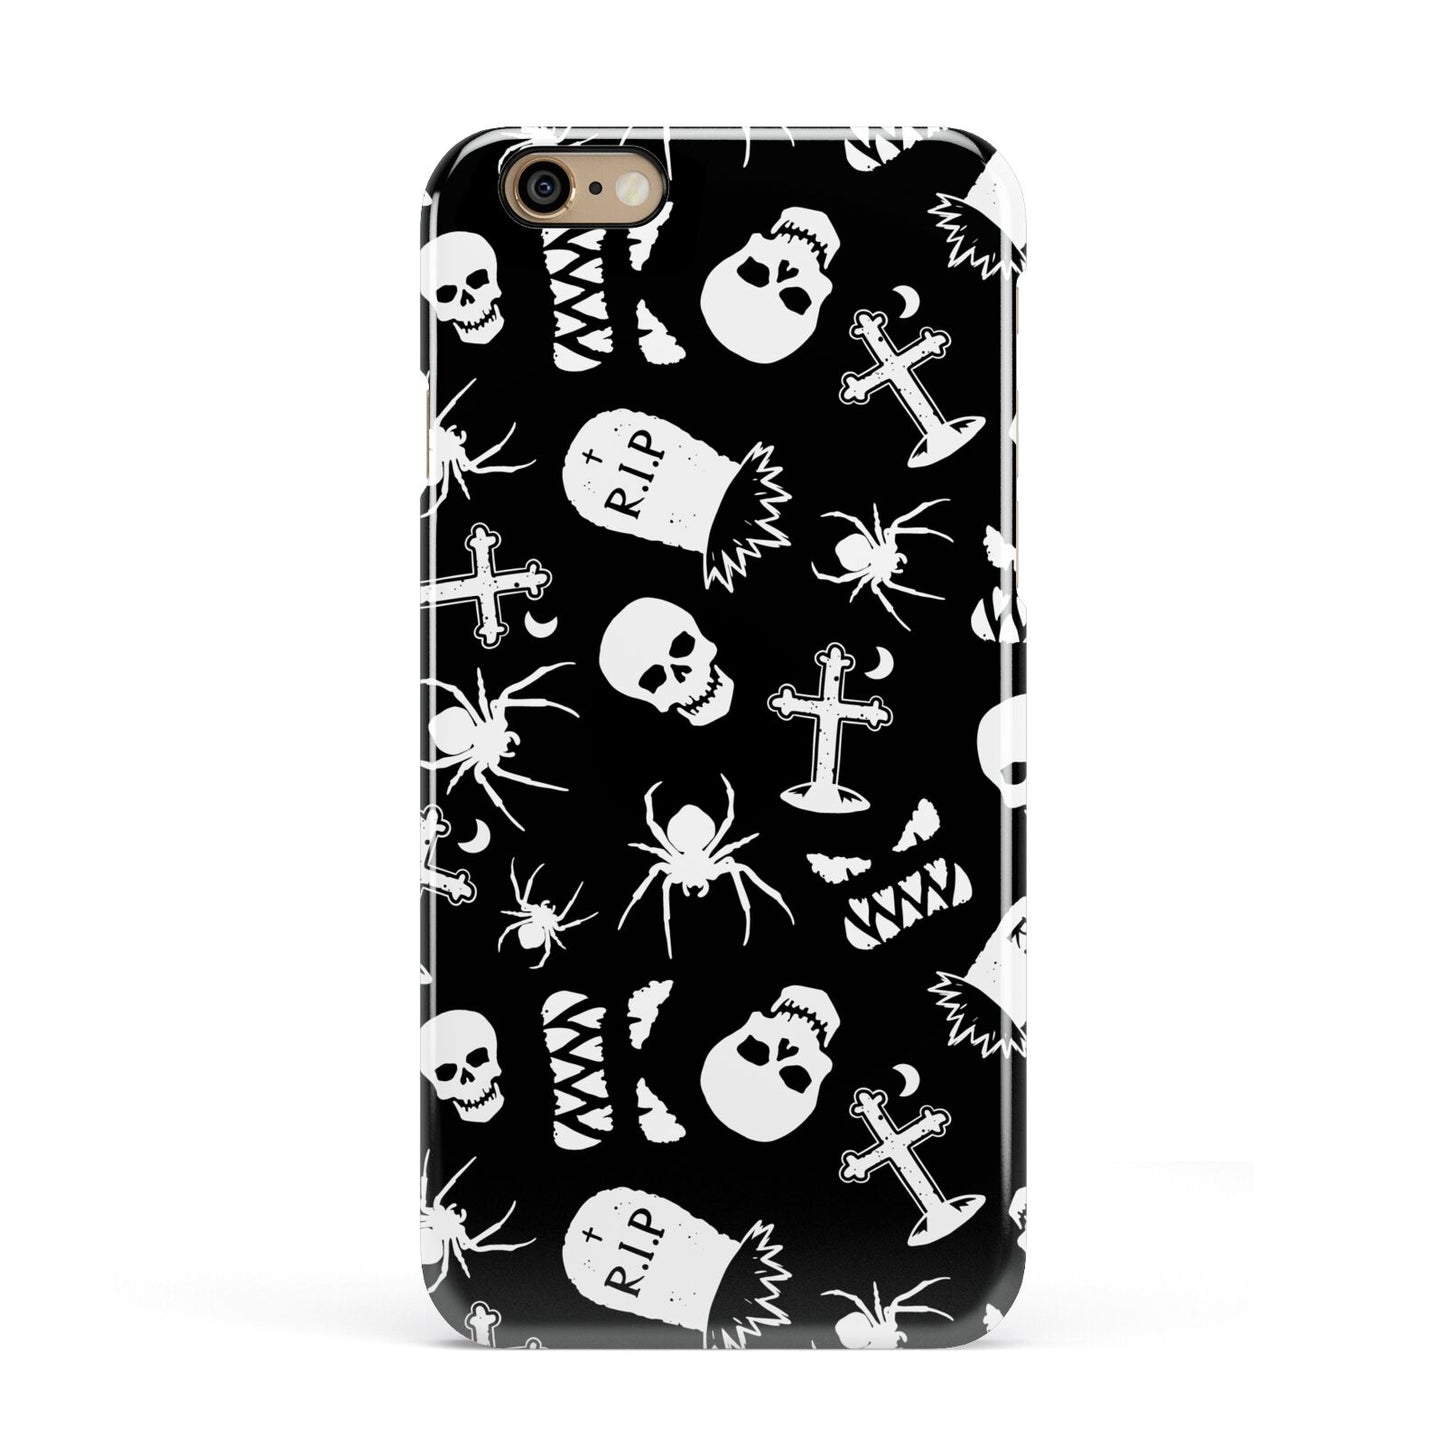 Spooky Illustrations Apple iPhone 6 3D Snap Case